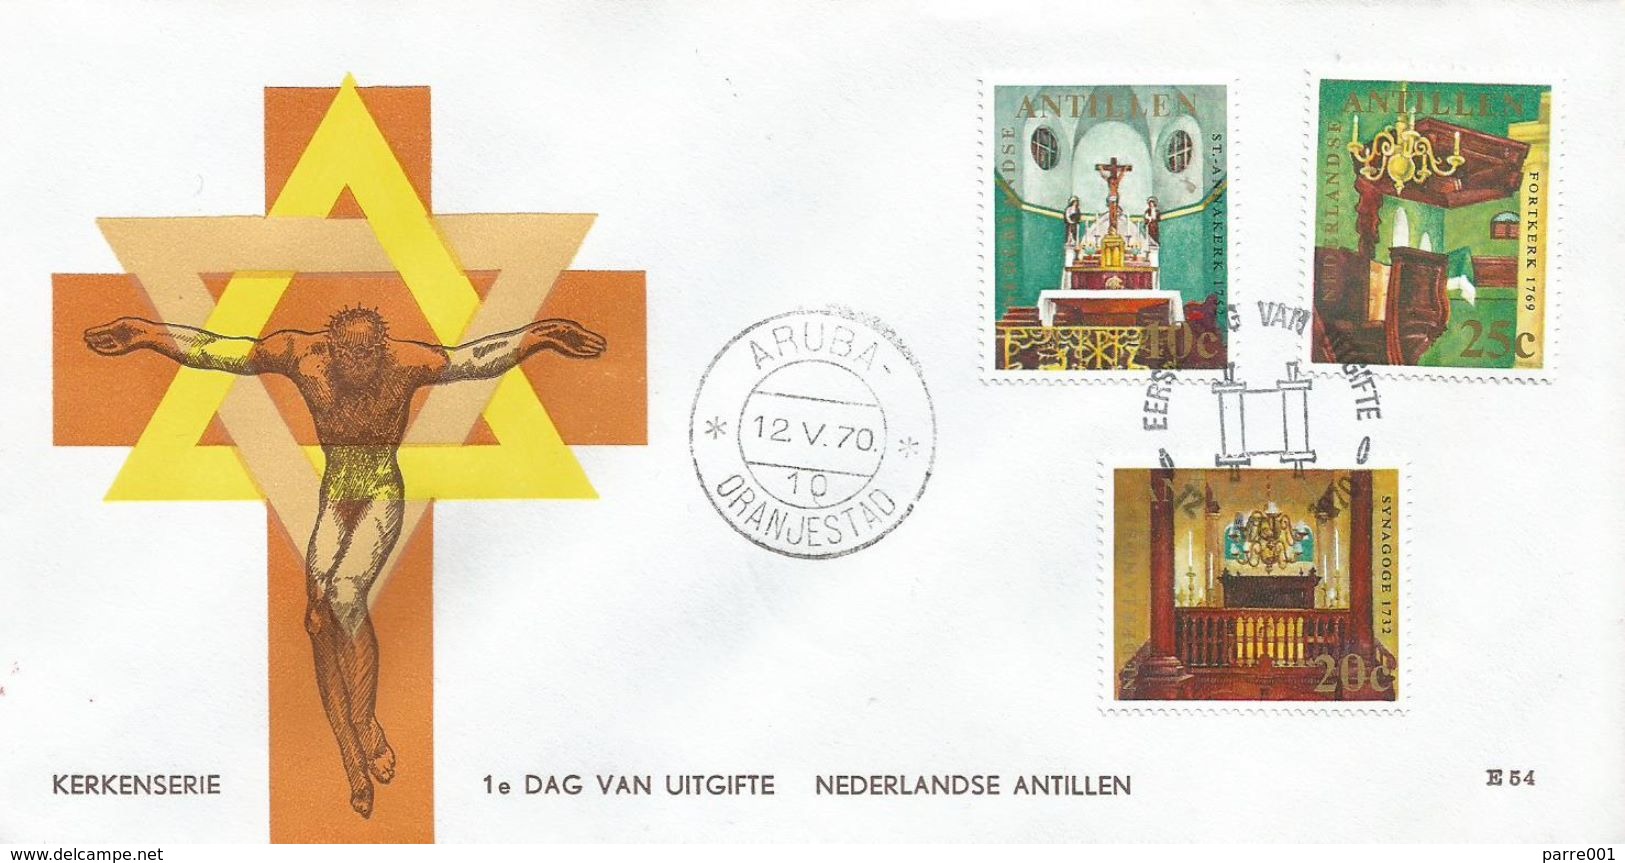 Netherlands Antilles 1970 Aruba Curaçao Interior Emanuel-Synagoge Punda Anna Church Obrabanda FDC Cover - Judaika, Judentum